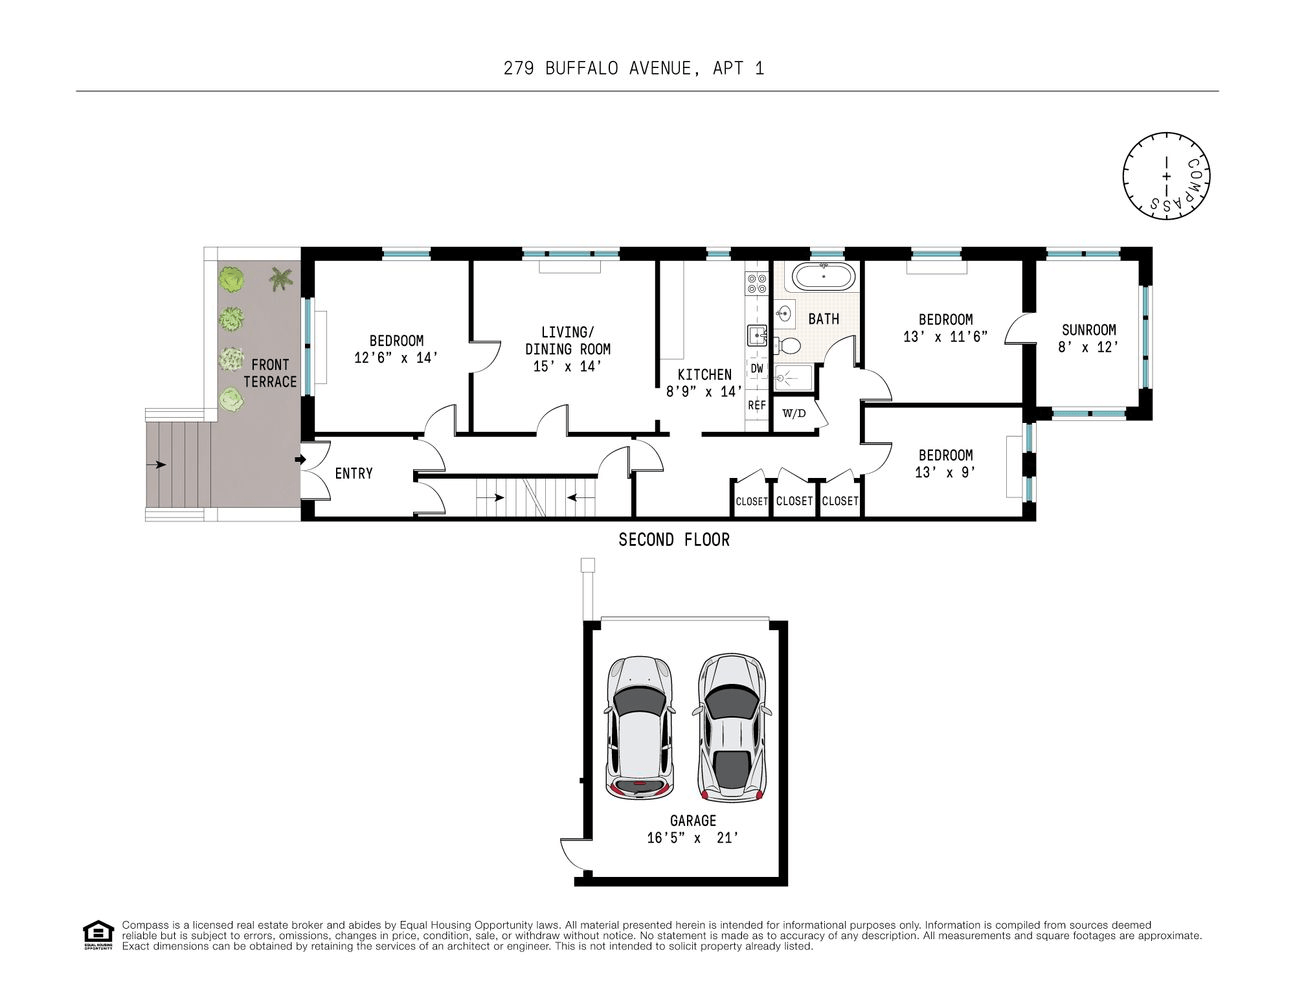 floorplan of unit 1 at 279 buffalo avenue